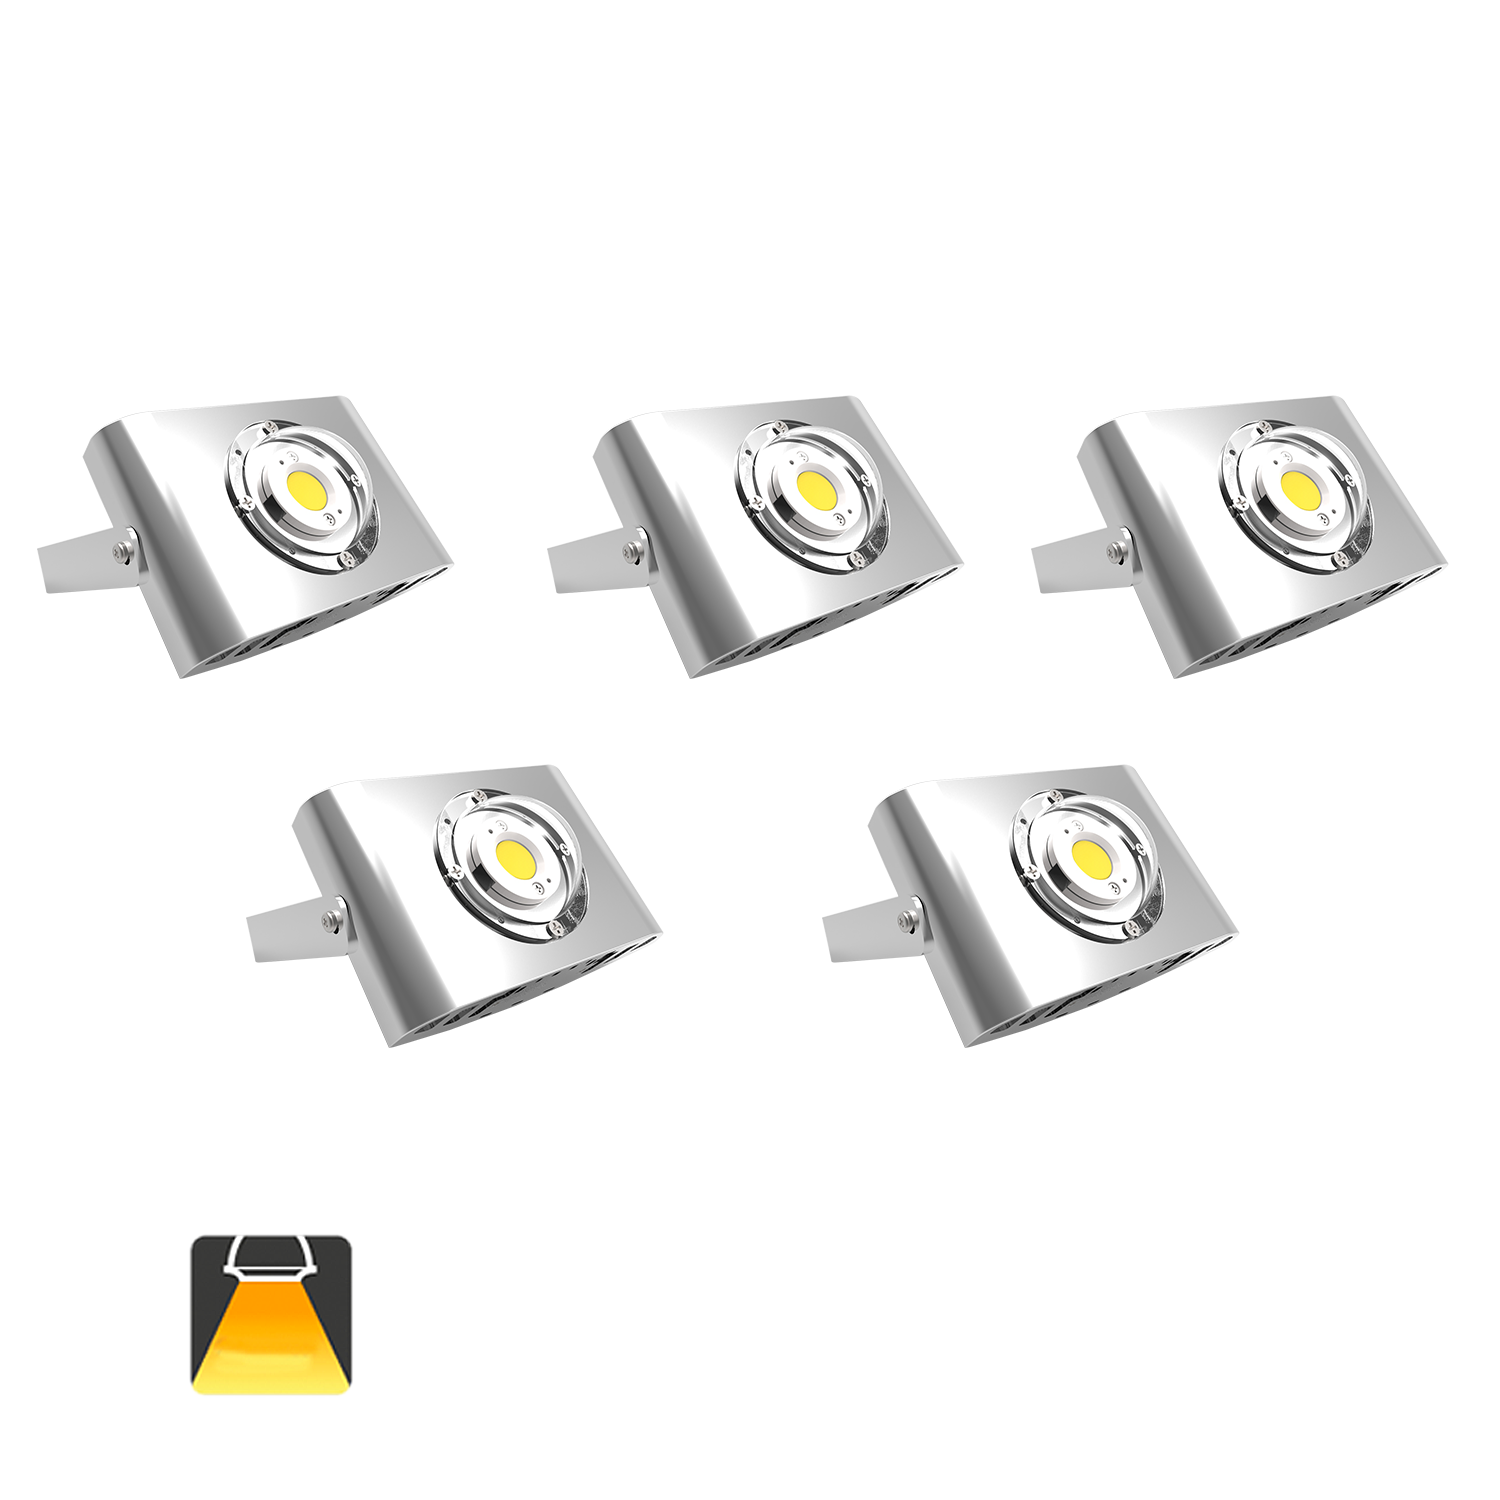 Aigostar - Confezione da 5 Faretto a LED COB，10W, 850LM，Impermeabile IP65, Luce Naturale 4000K[Classe di efficienza energetica A+]